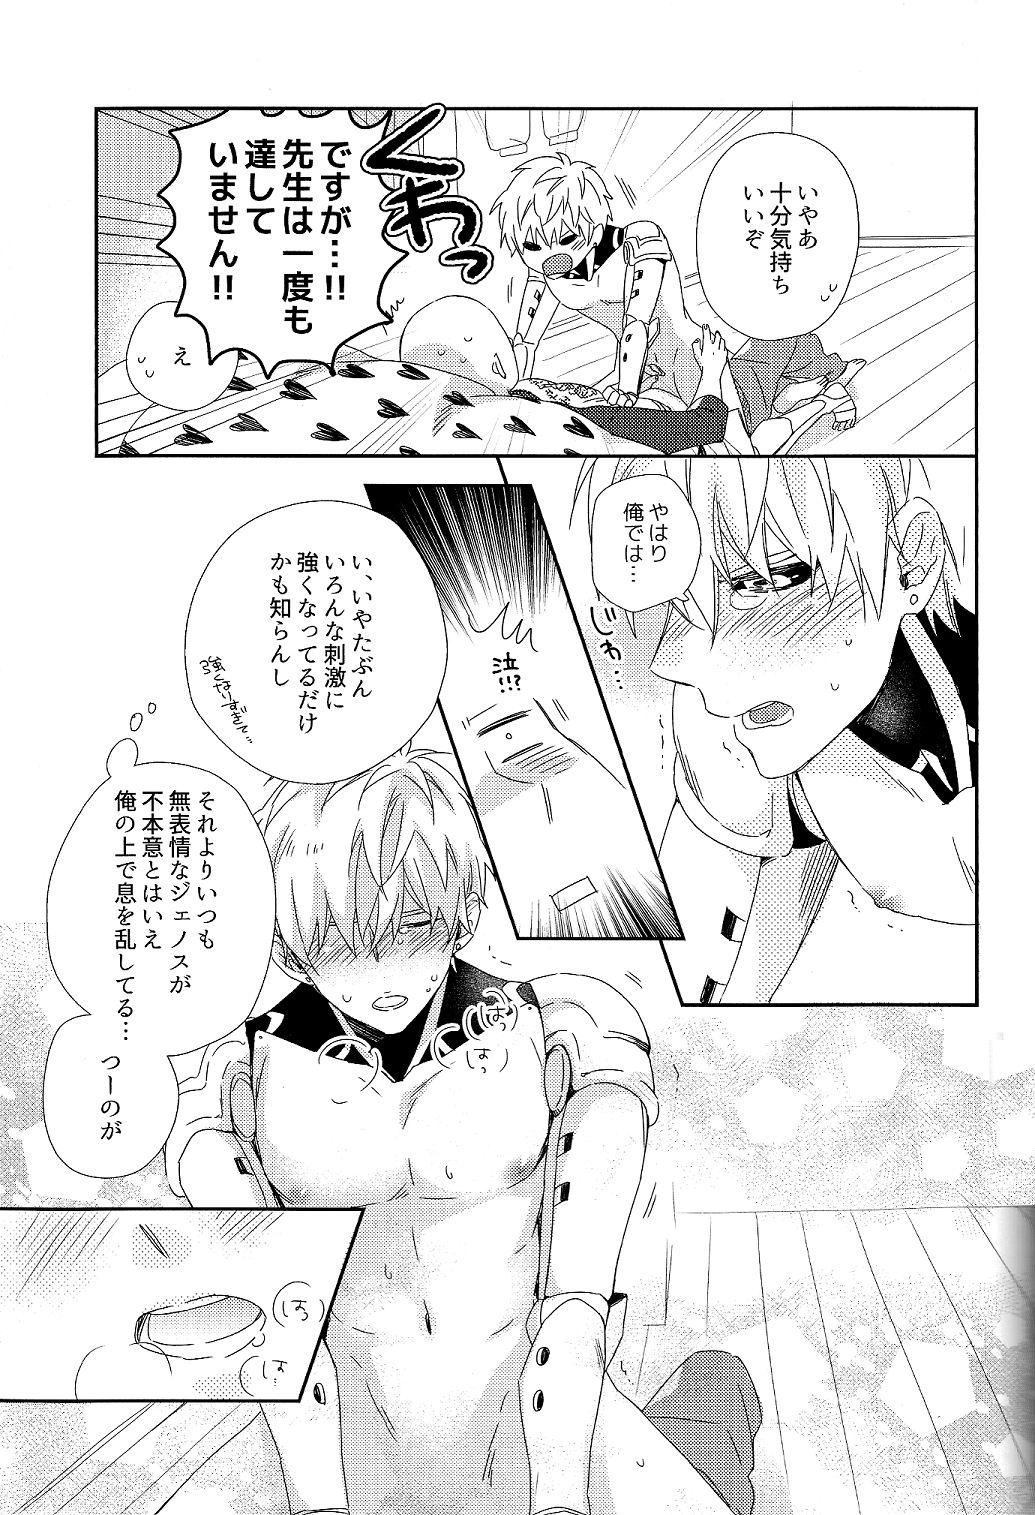 Punk Sensei no xxx ga xx Sugite Tsurai. - One punch man Topless - Page 7